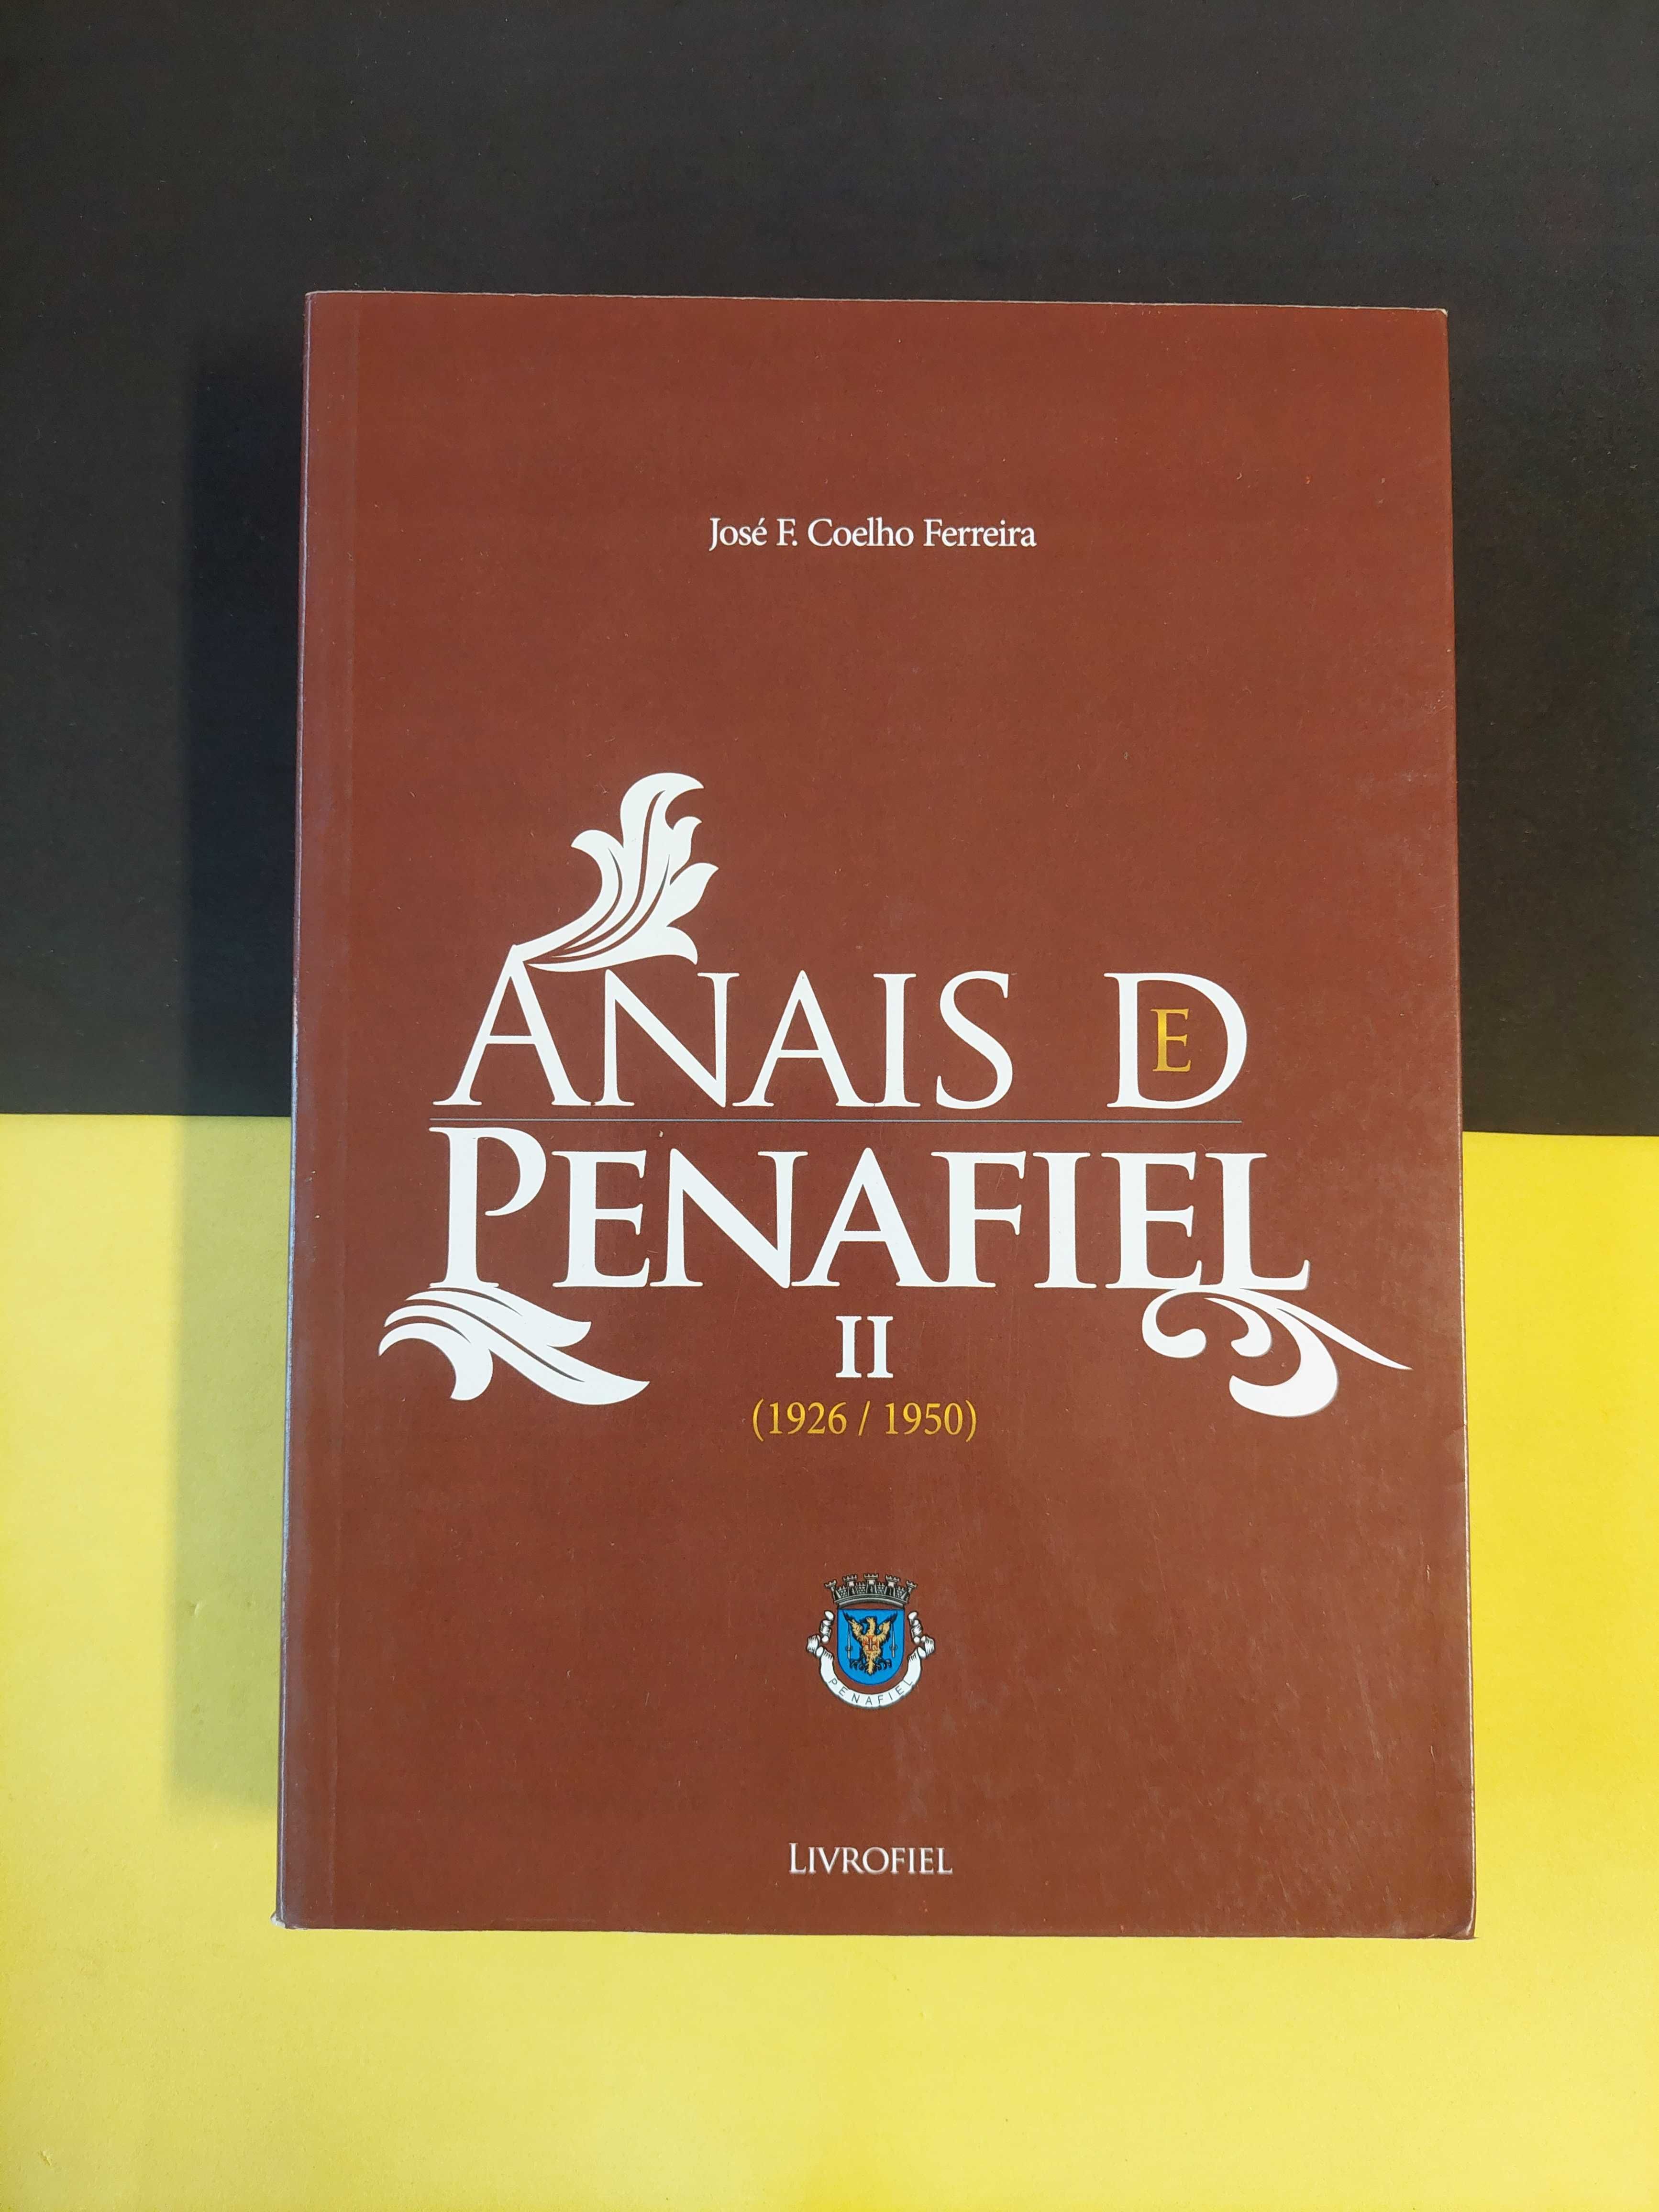 Anais de Penafiel (1900/1925) e (1926/1950), dois volumes